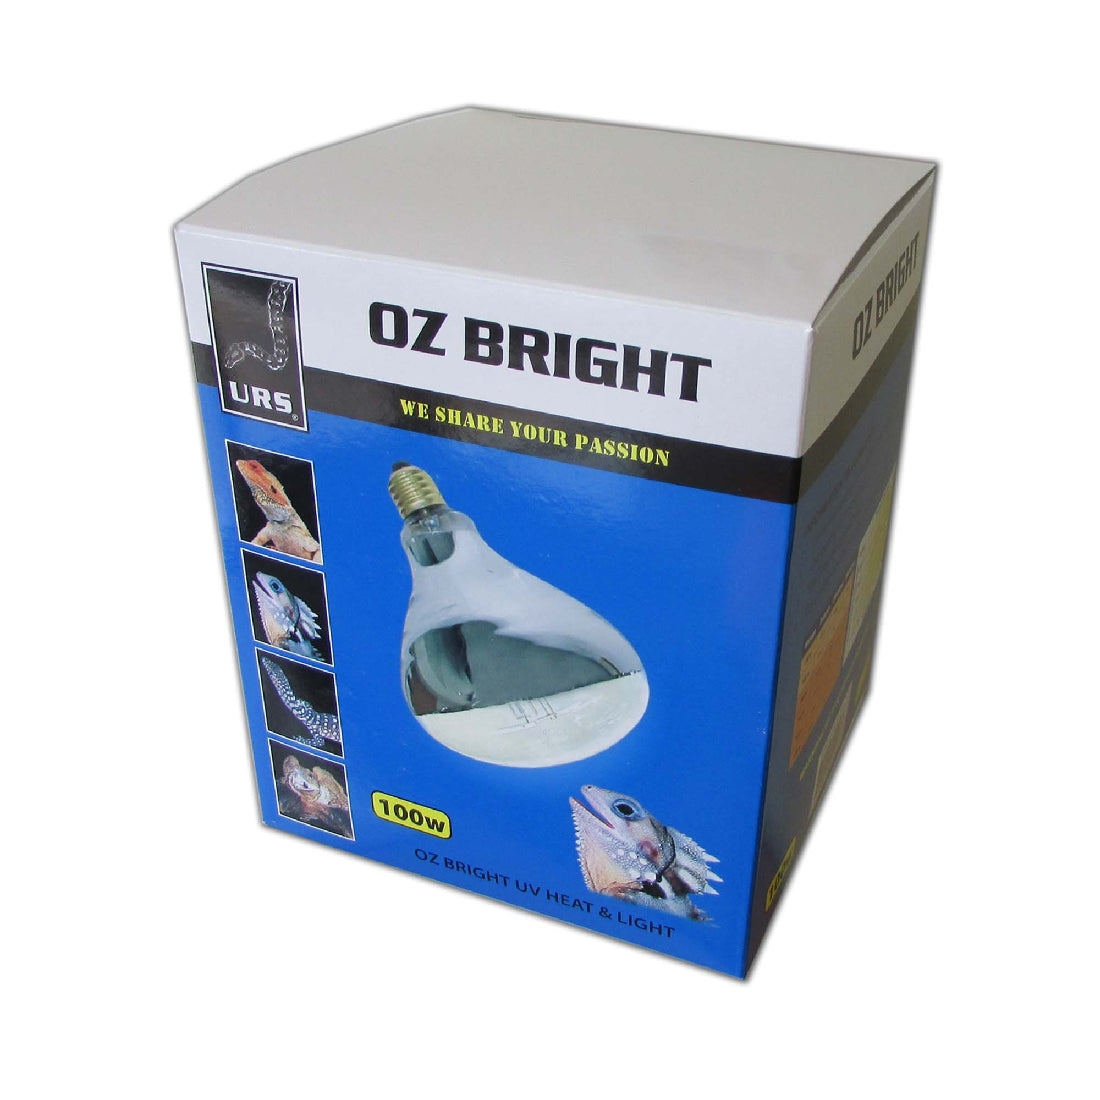 Oz Bright Uv - 100w